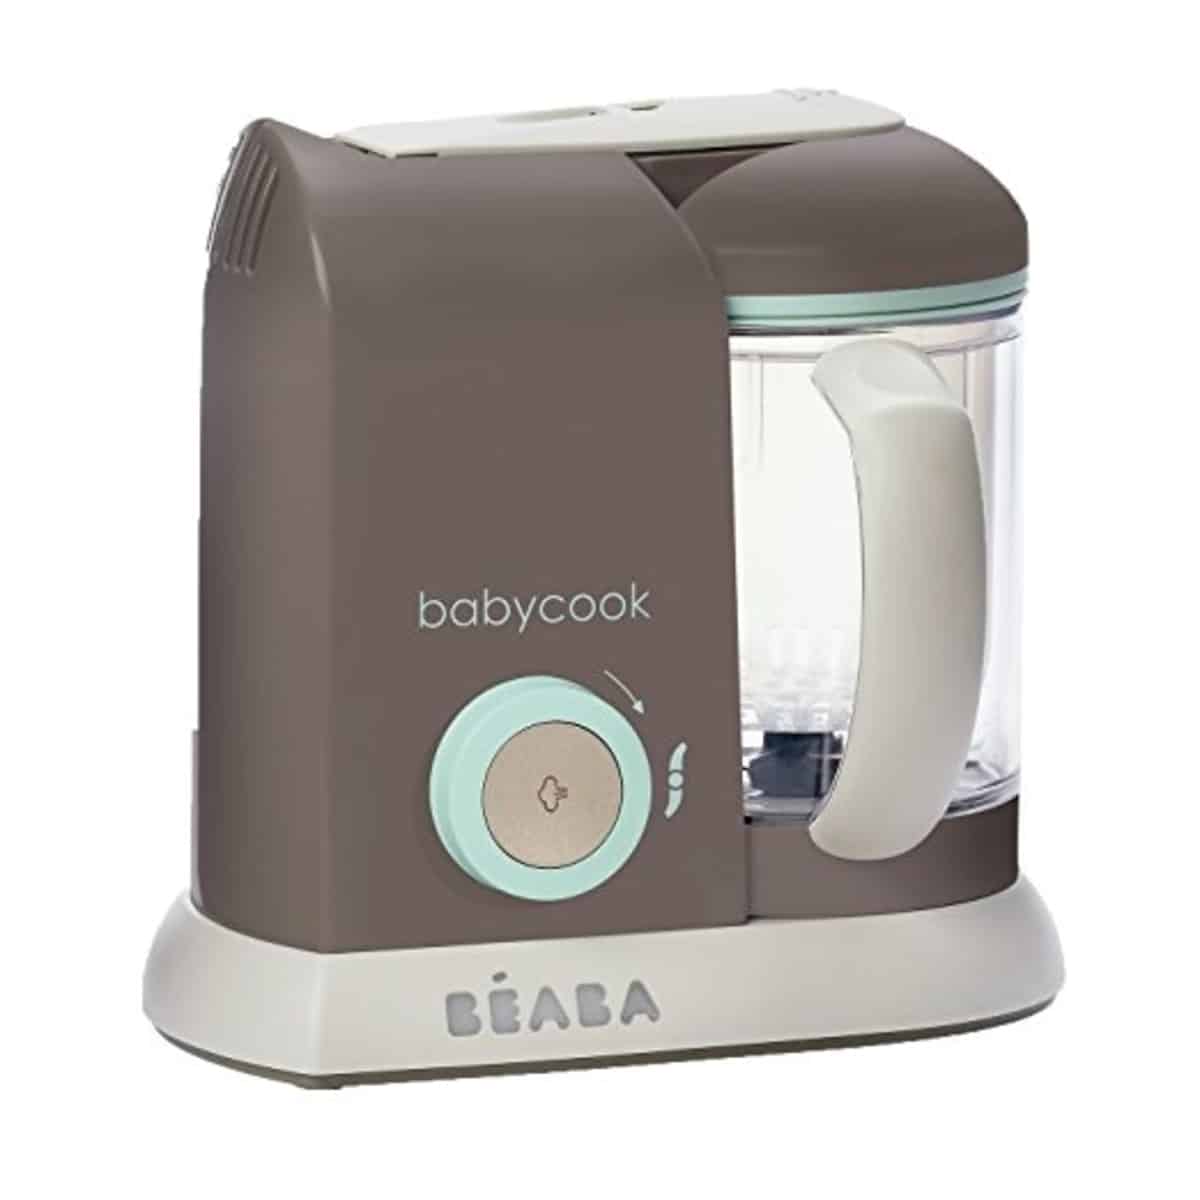 BEABA Babycook 4 in 1 Steam Cooker and Blender, 4.5 cups, Dishwasher Safe, Latte Mint